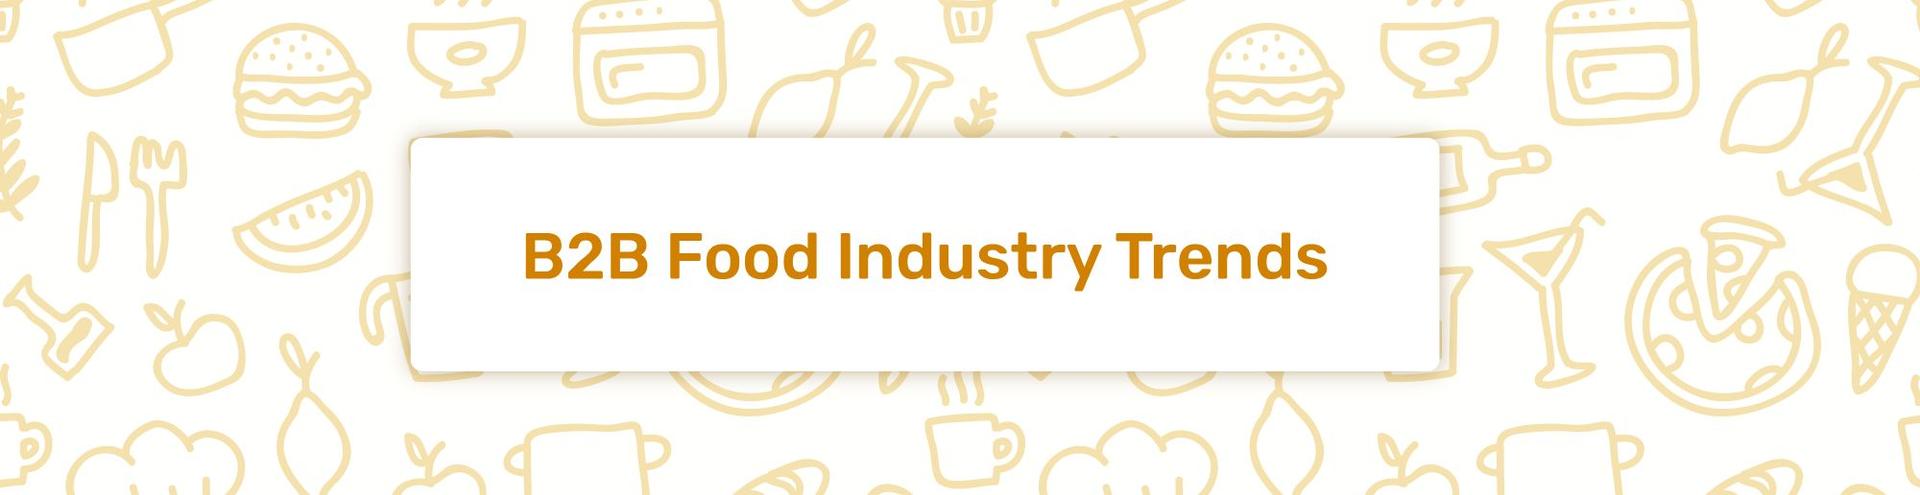 Online B2B Food Industry Trends